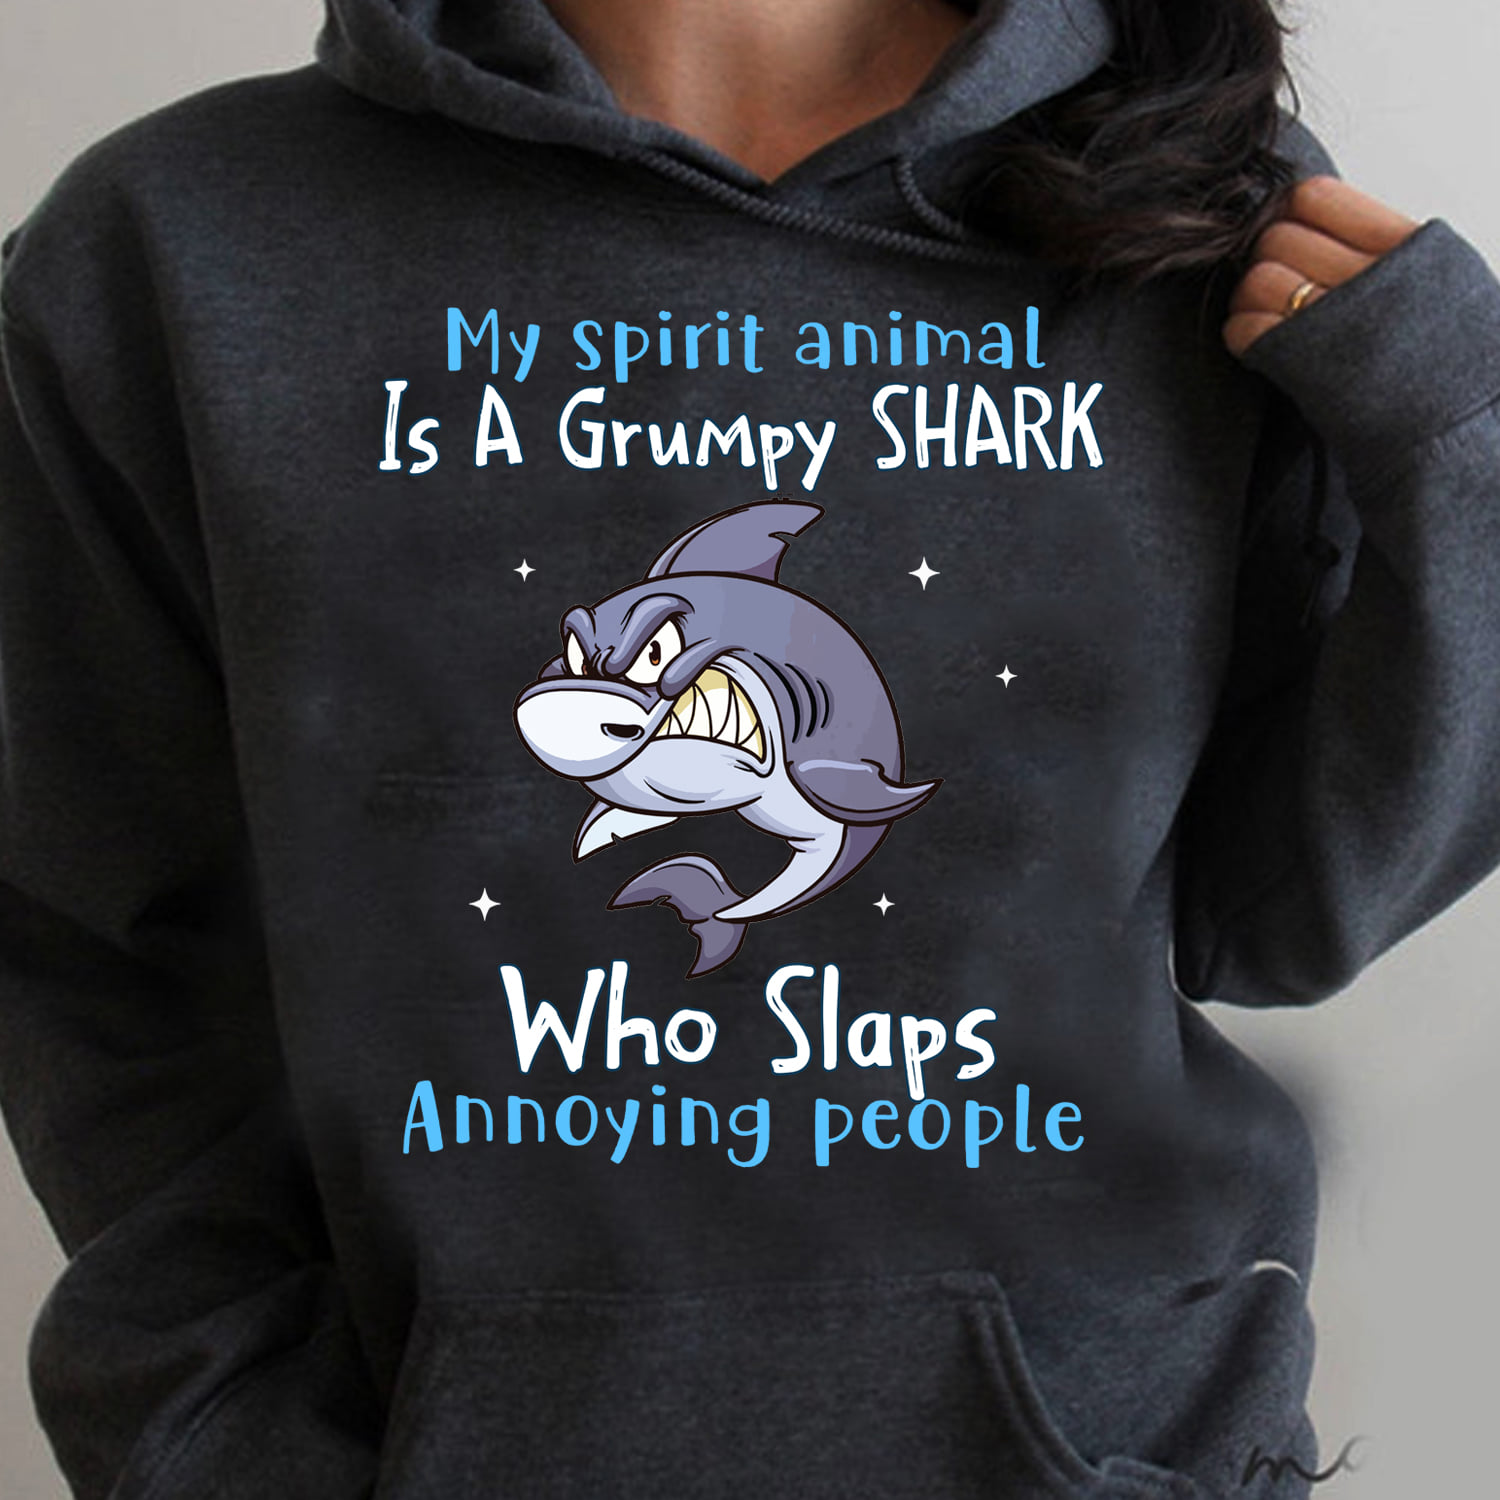 My spirit animal is a grumpy shark who slap annoying people